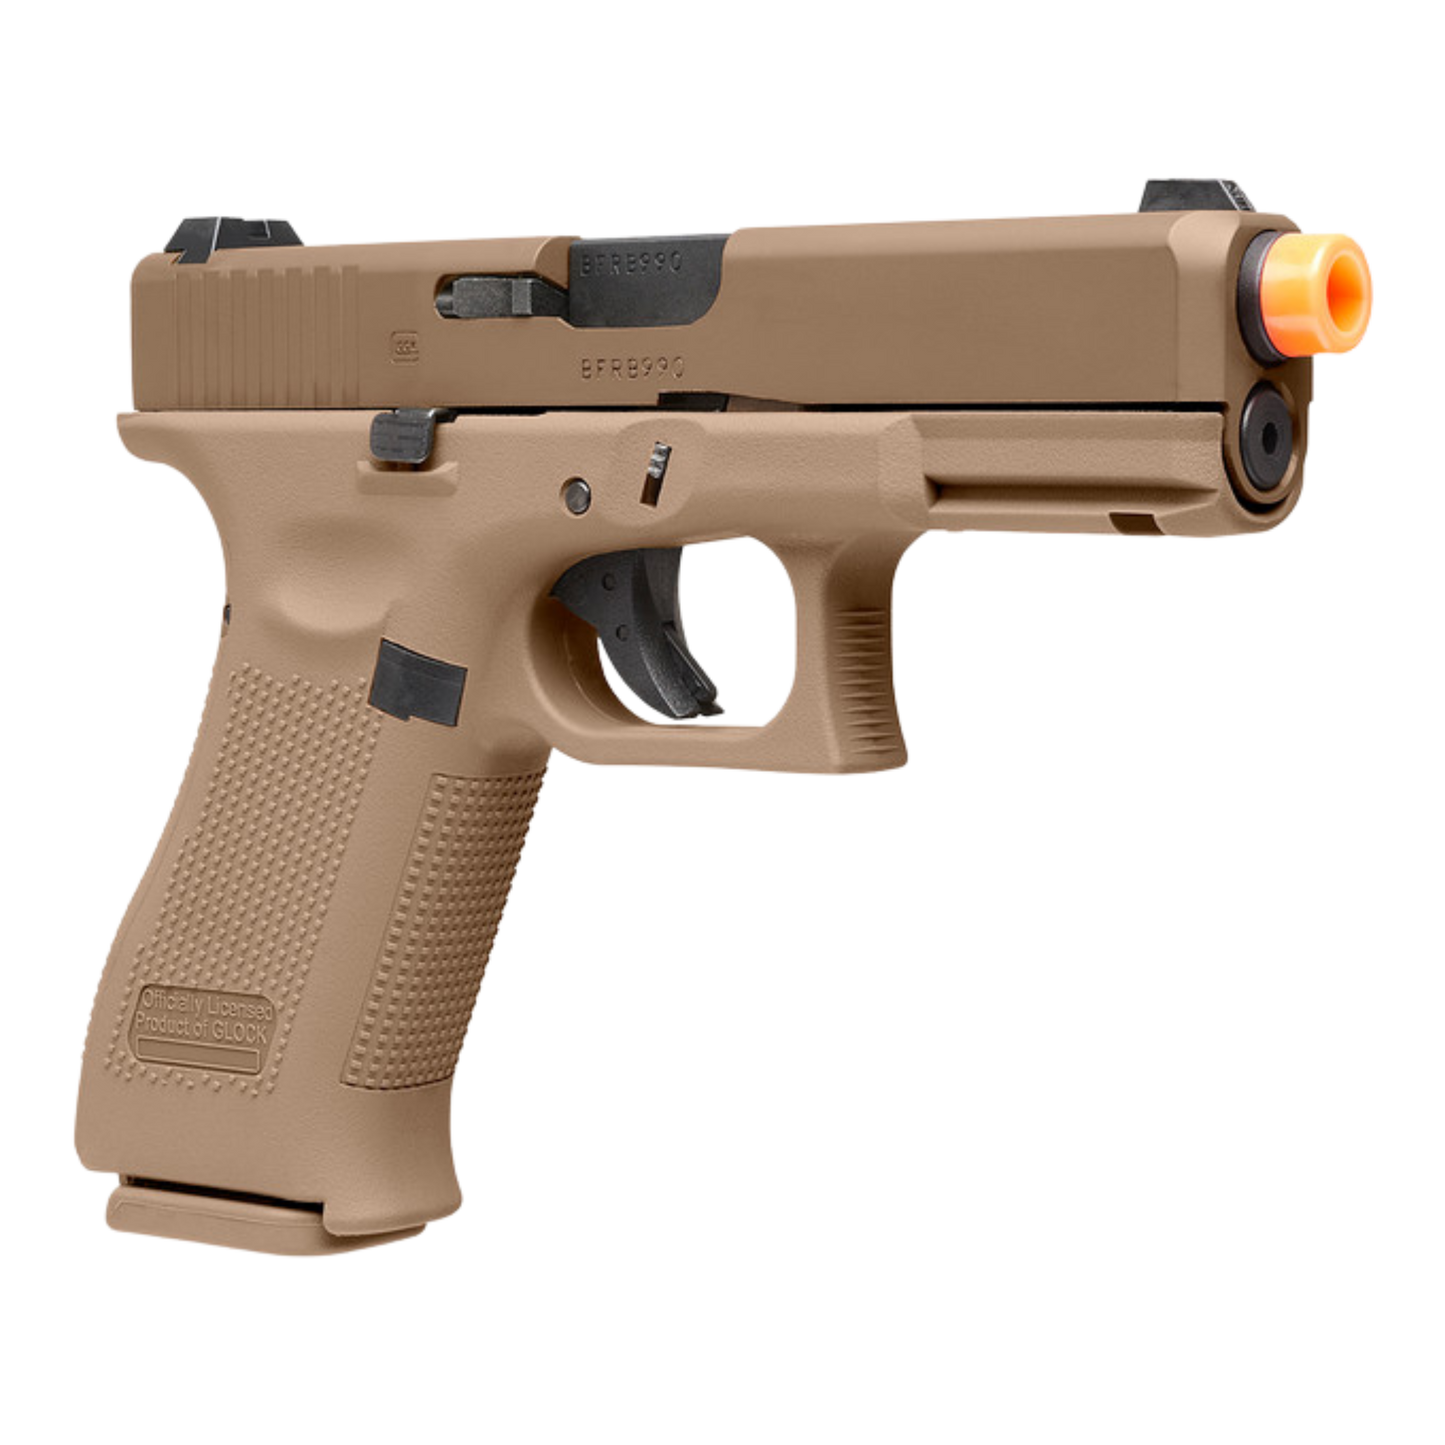 Elite Force Glock 19X Airsoft Pistol